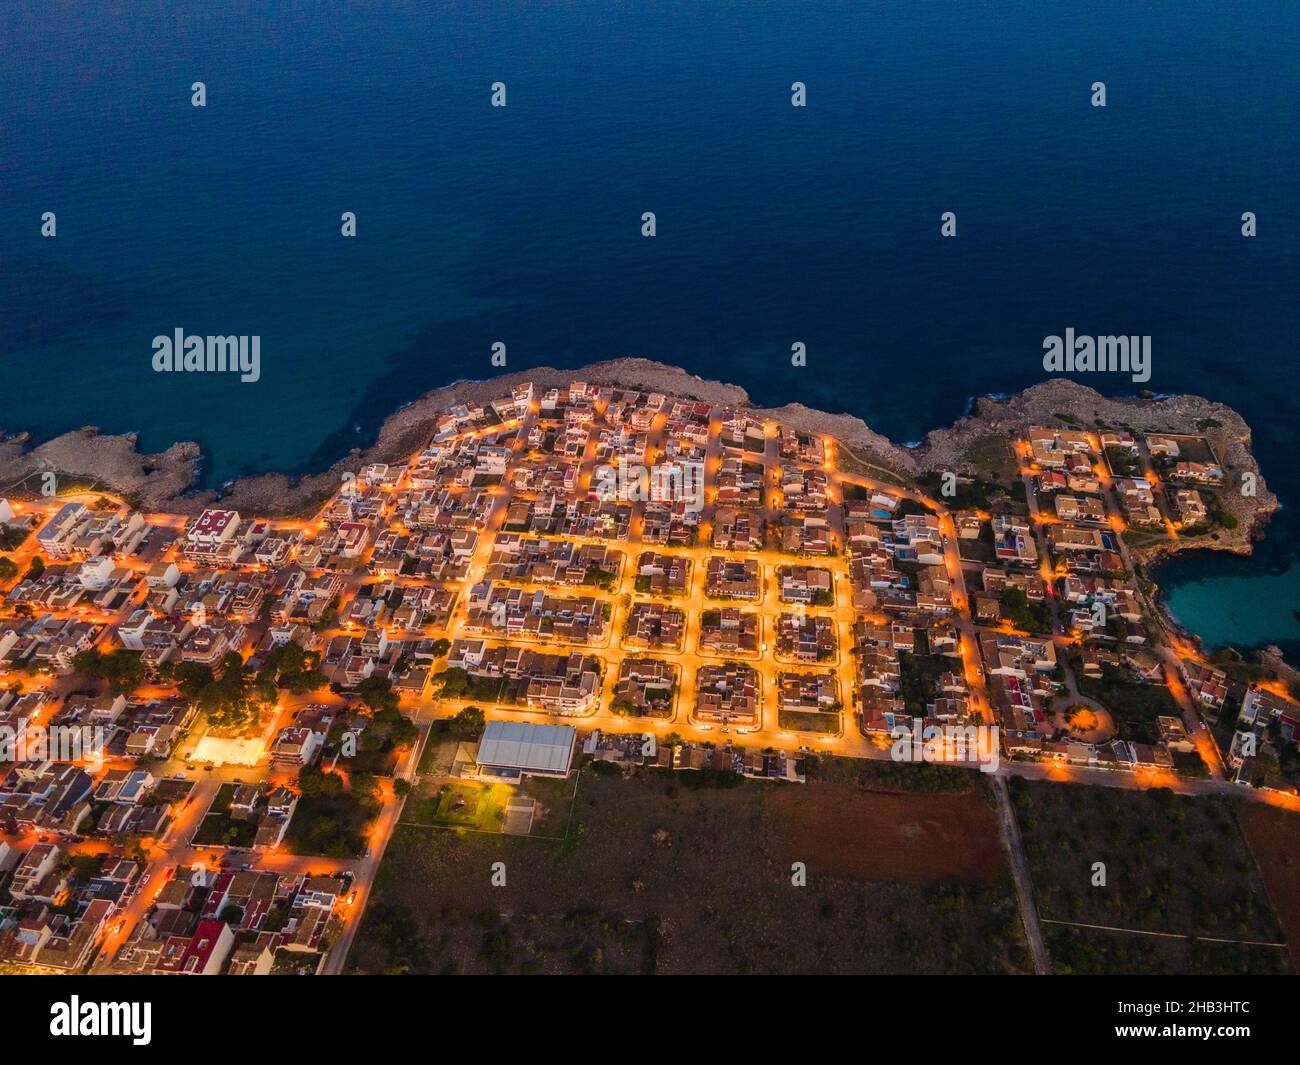 Sa Coma, S'Illot, Mallorca, Spain evening photos from Drone. Aerial imagery of Mallorca Island! Stock Photo